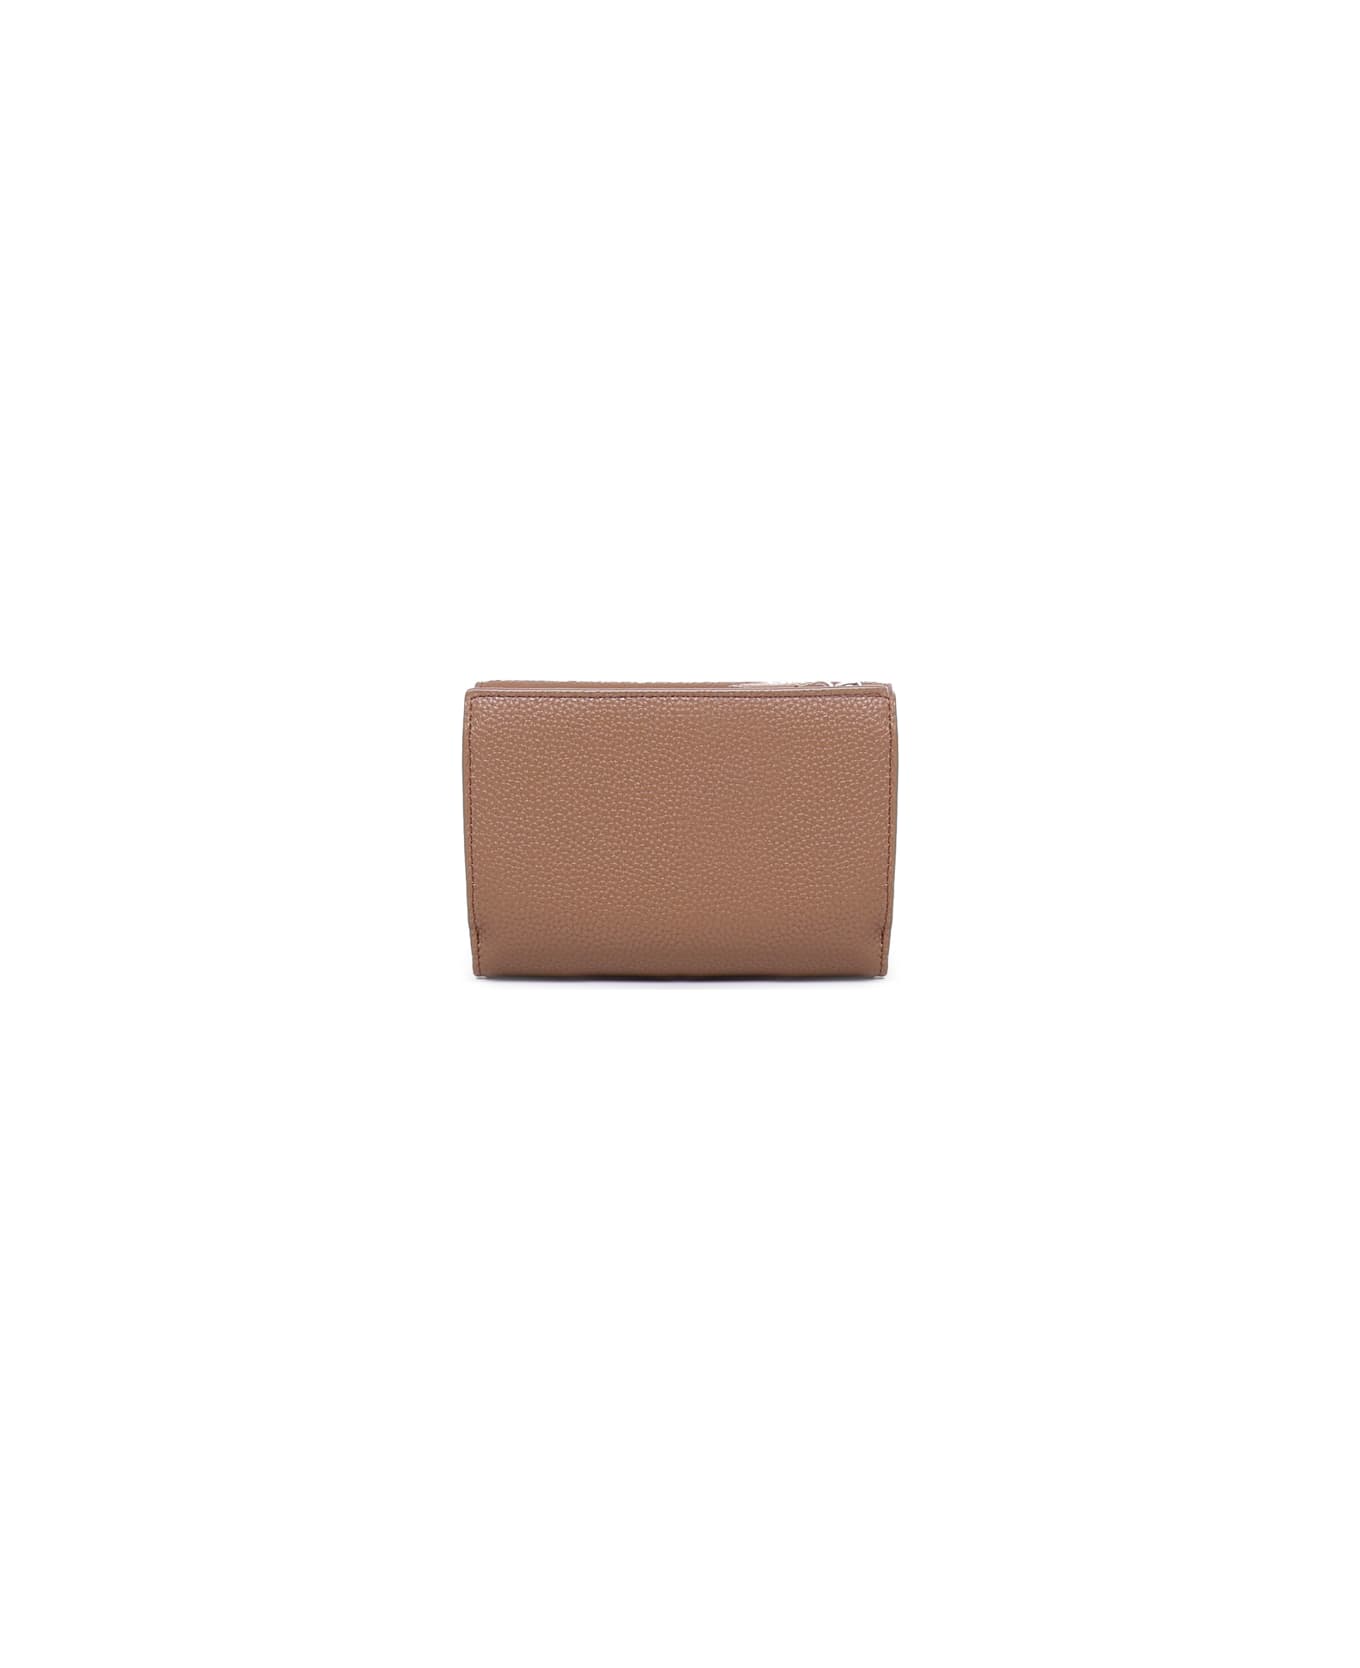 Giorgio Armani Wallet With Card Compartment And Magnetic Closure Giorgio Armani - Wood 財布